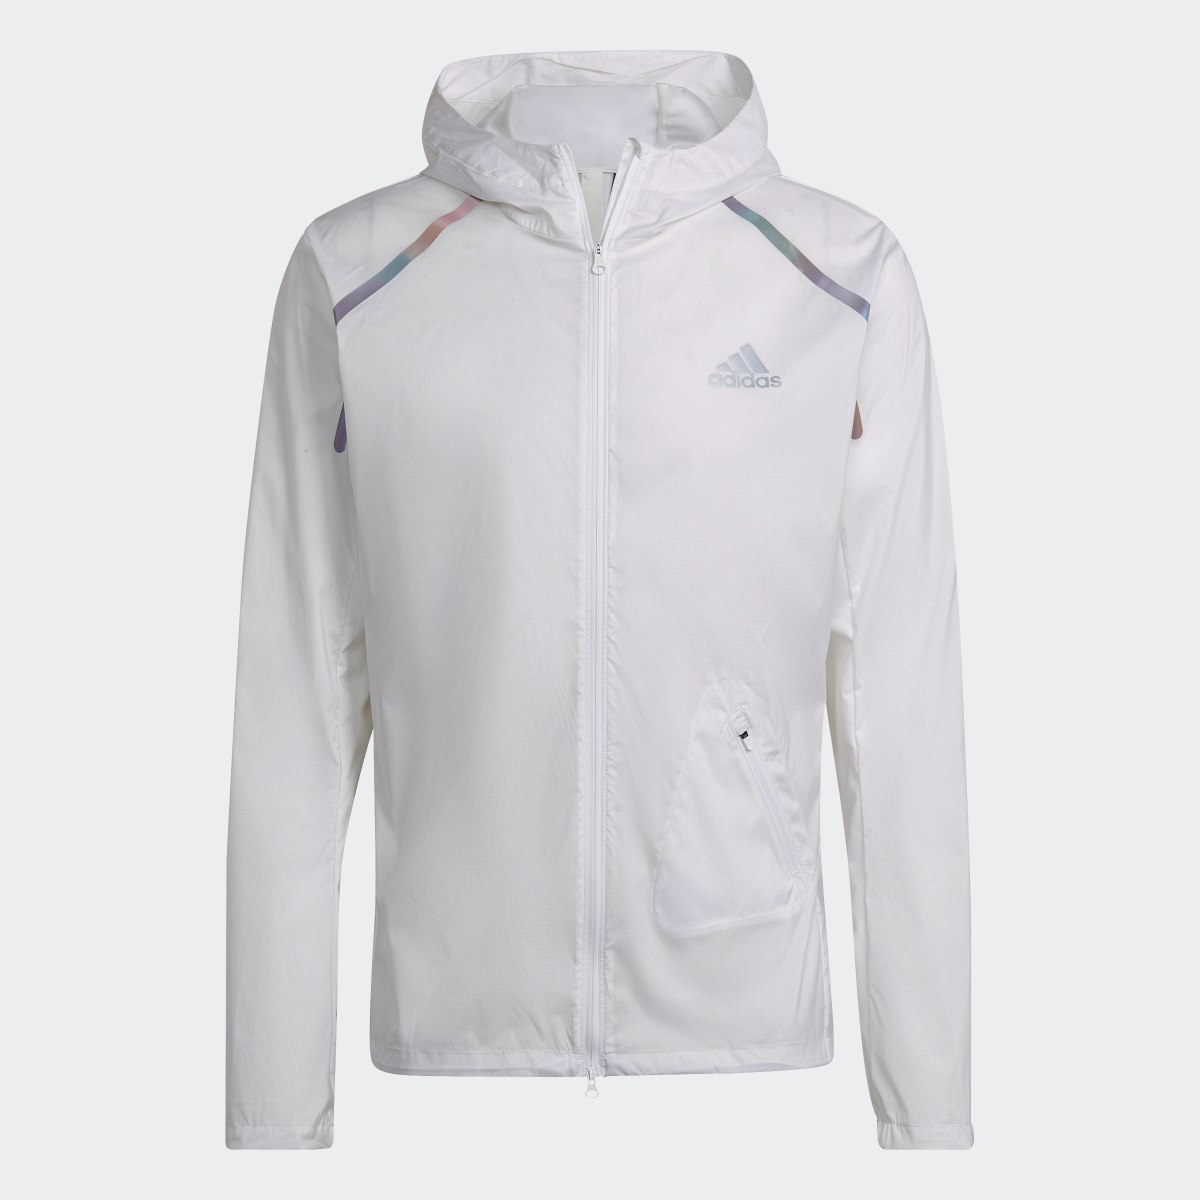 Adidas Marathon Jacket. 5